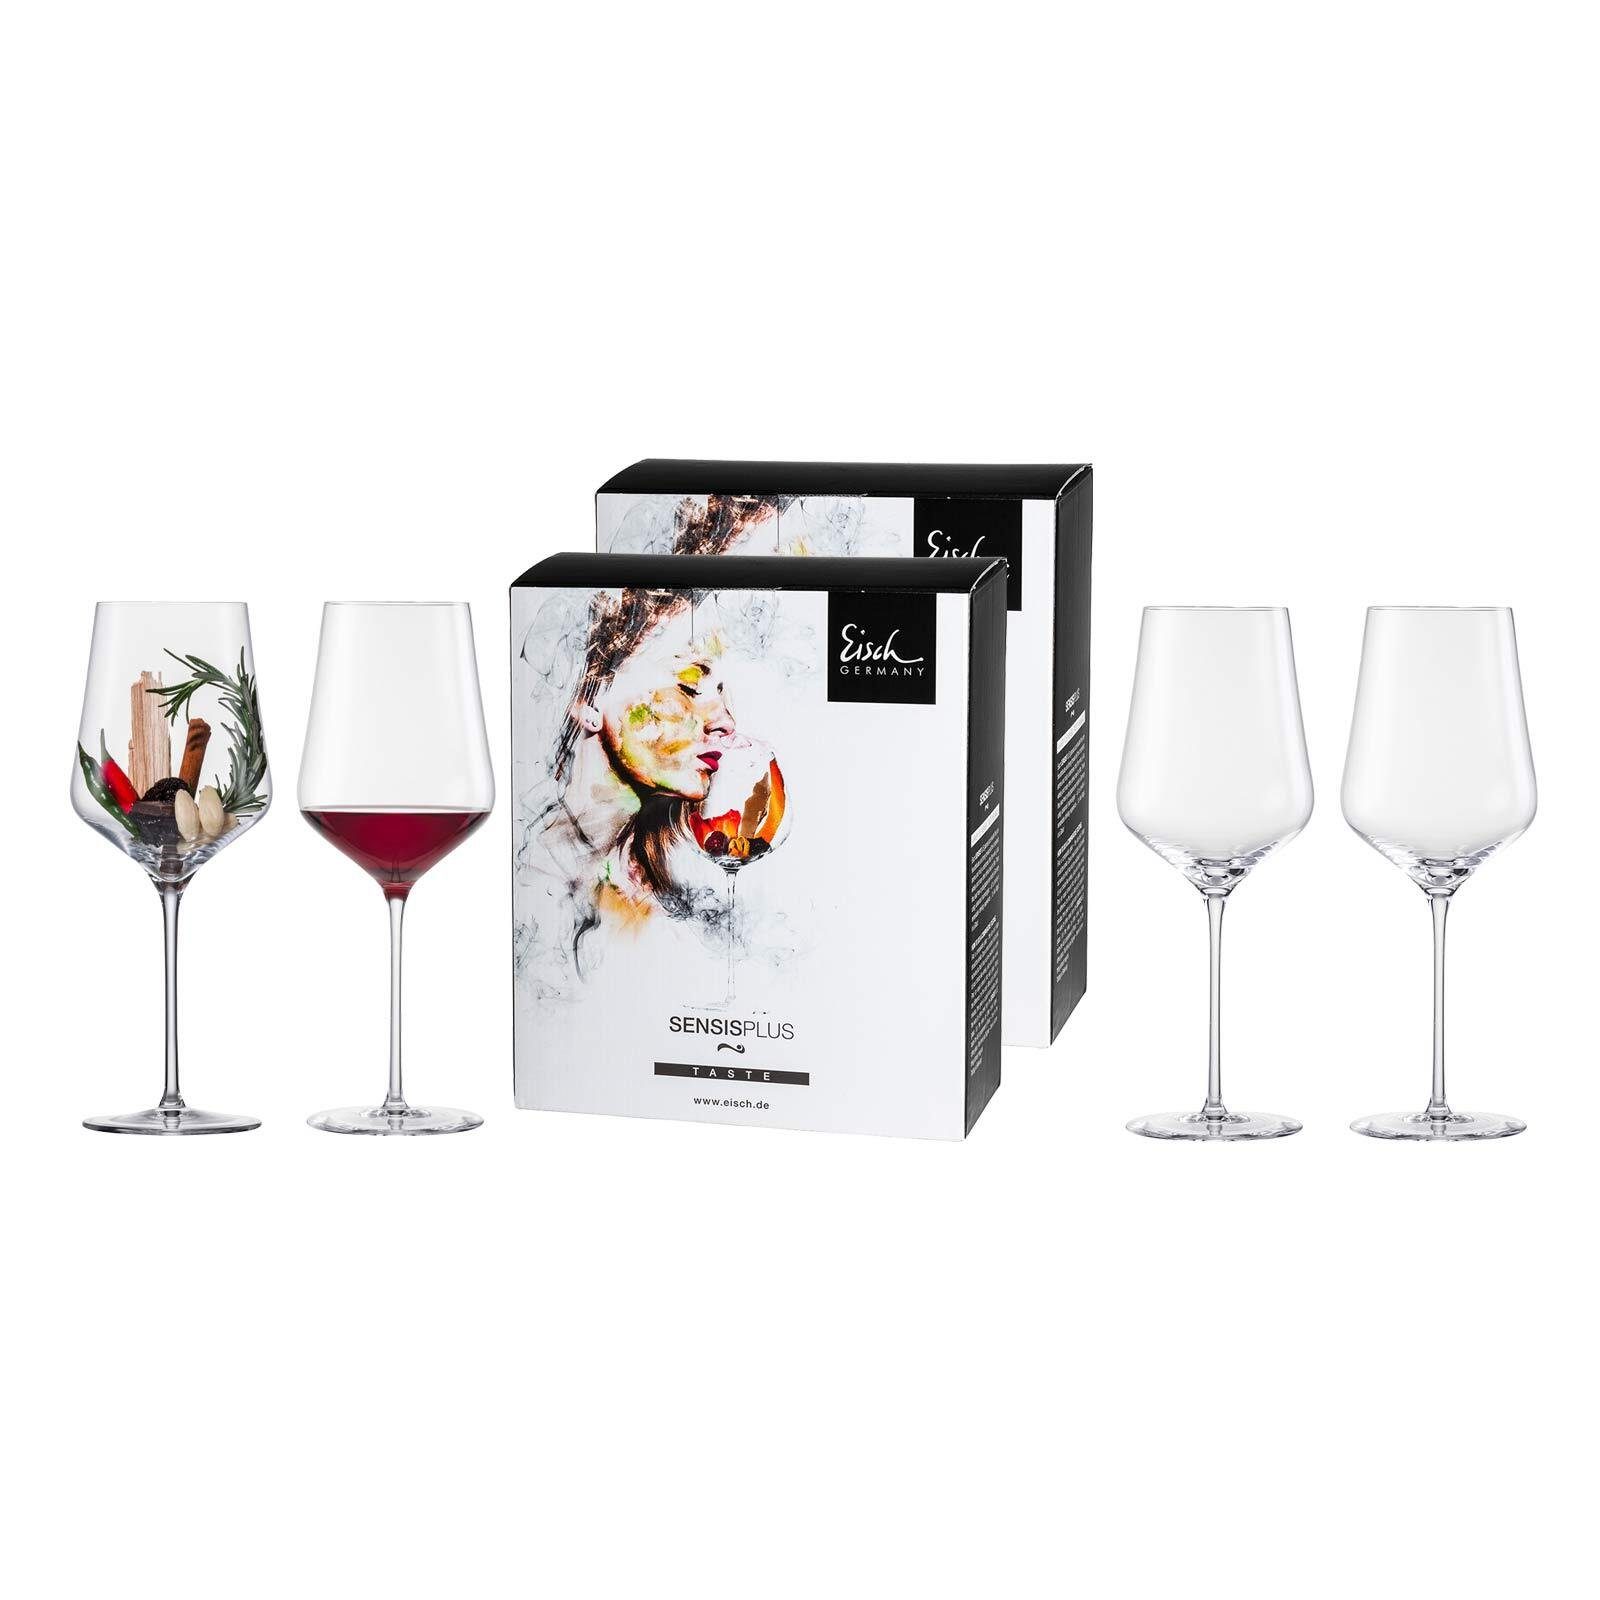 Eisch Rotweinglas Sky SensisPlus, Kristallglas, (Bordeauxglas), Bleifrei,  620 ml, 4-teilig